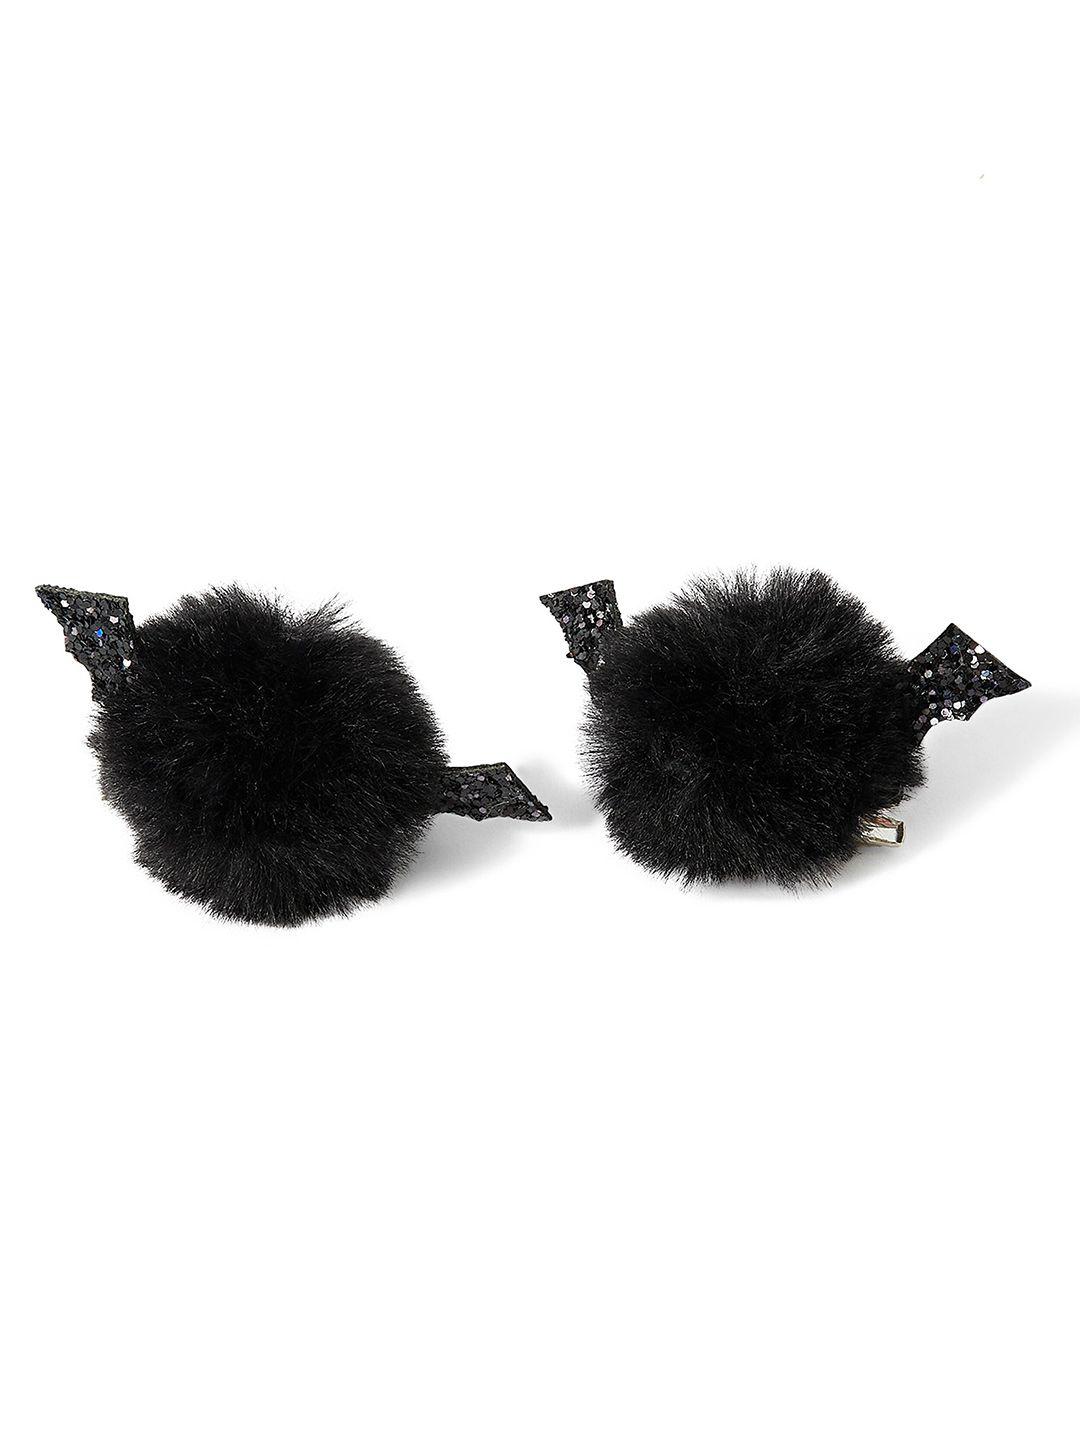 accessorize london girls set of 2 halloween pom pom hair clips